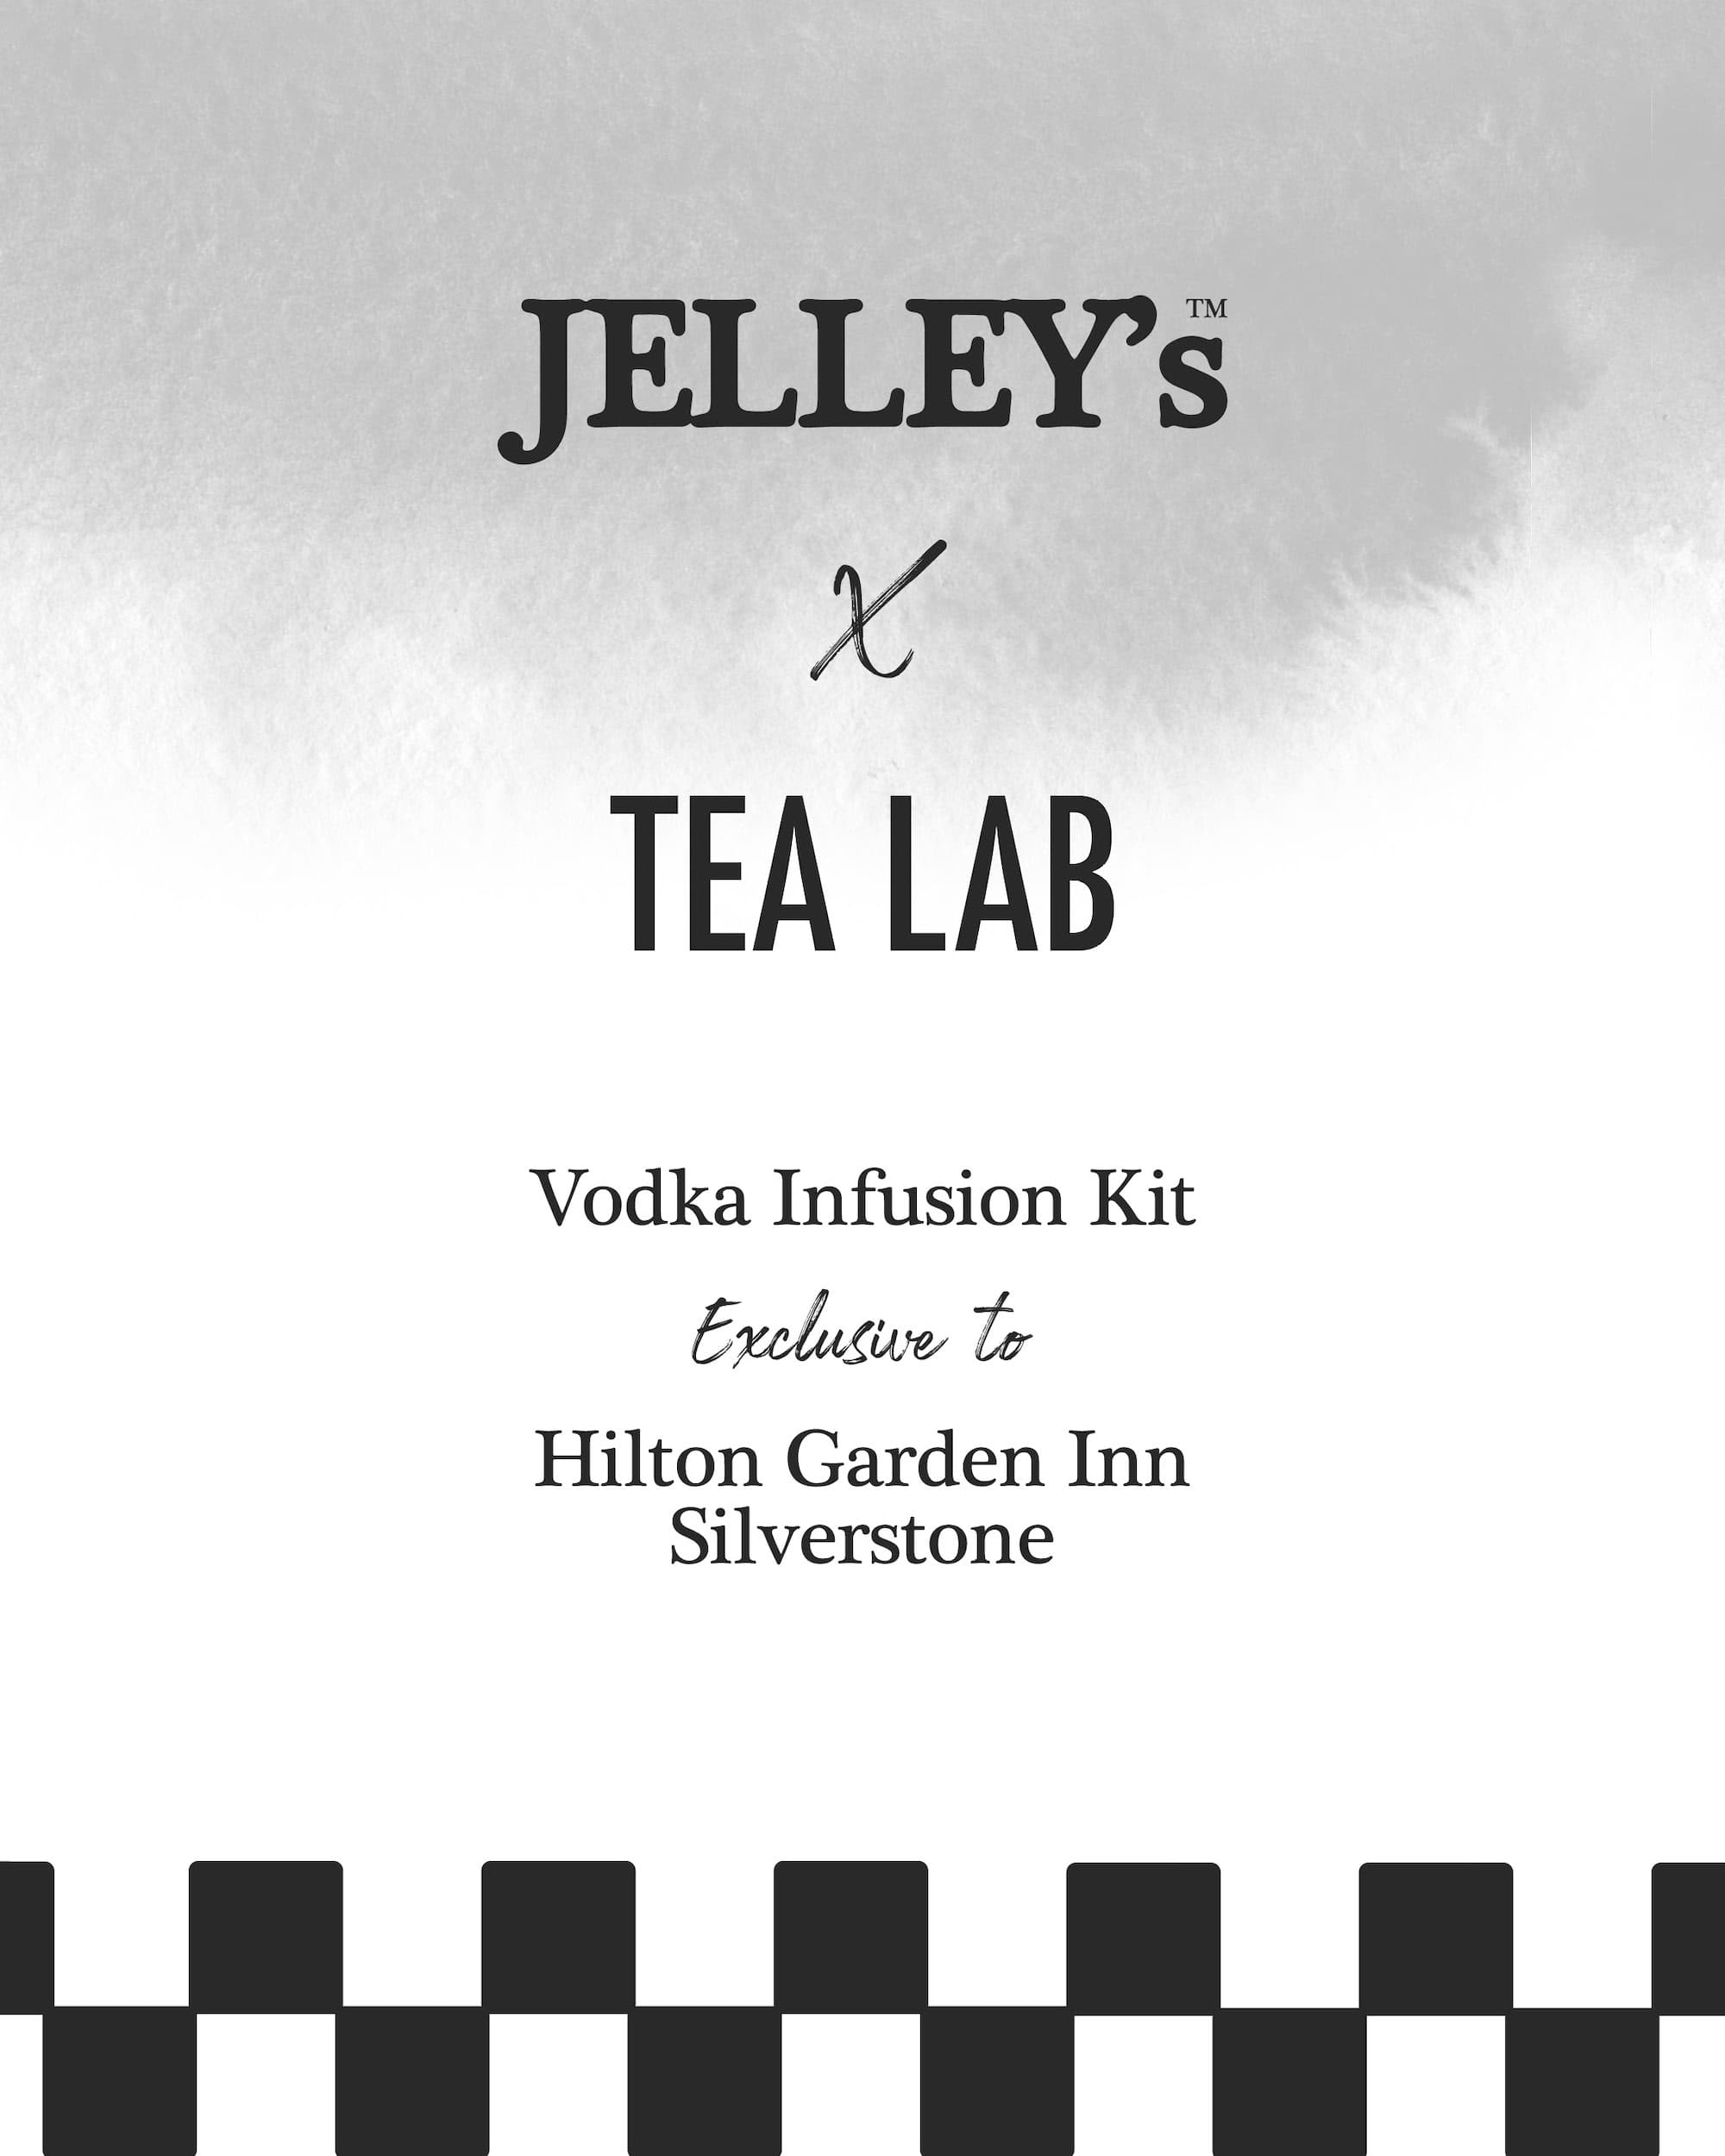 Jelley's Vodka and Tea Lab Vodka Infusion Kit Collaboration